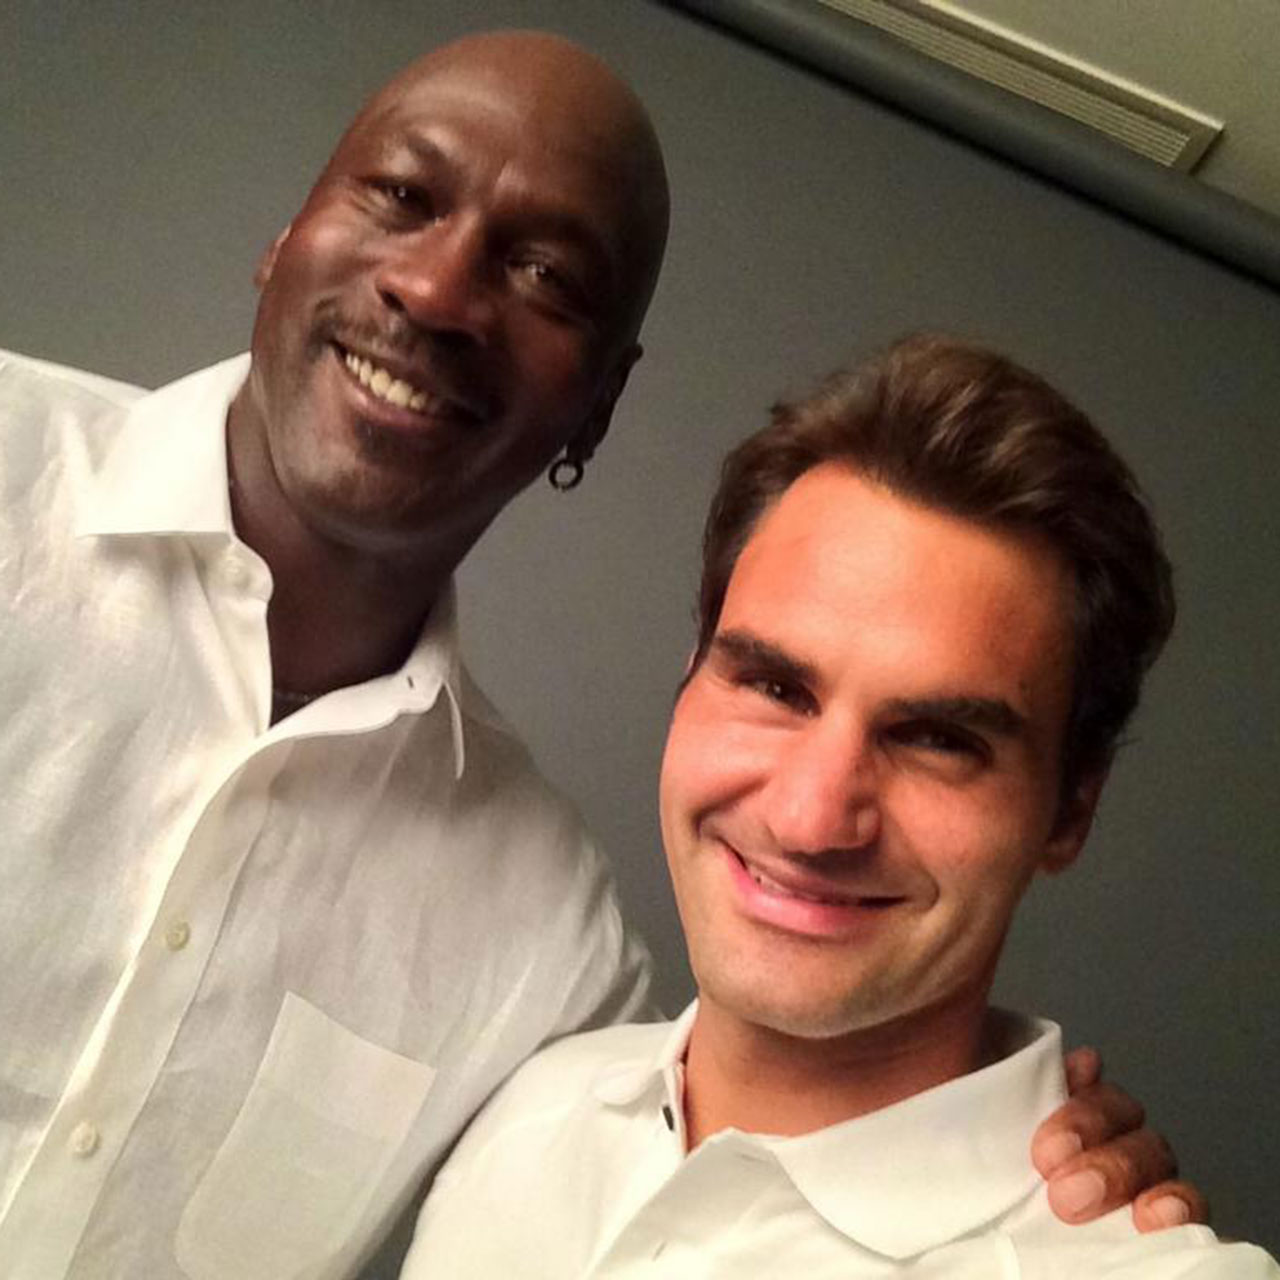 Roger Federer selfie with Michael Jordan